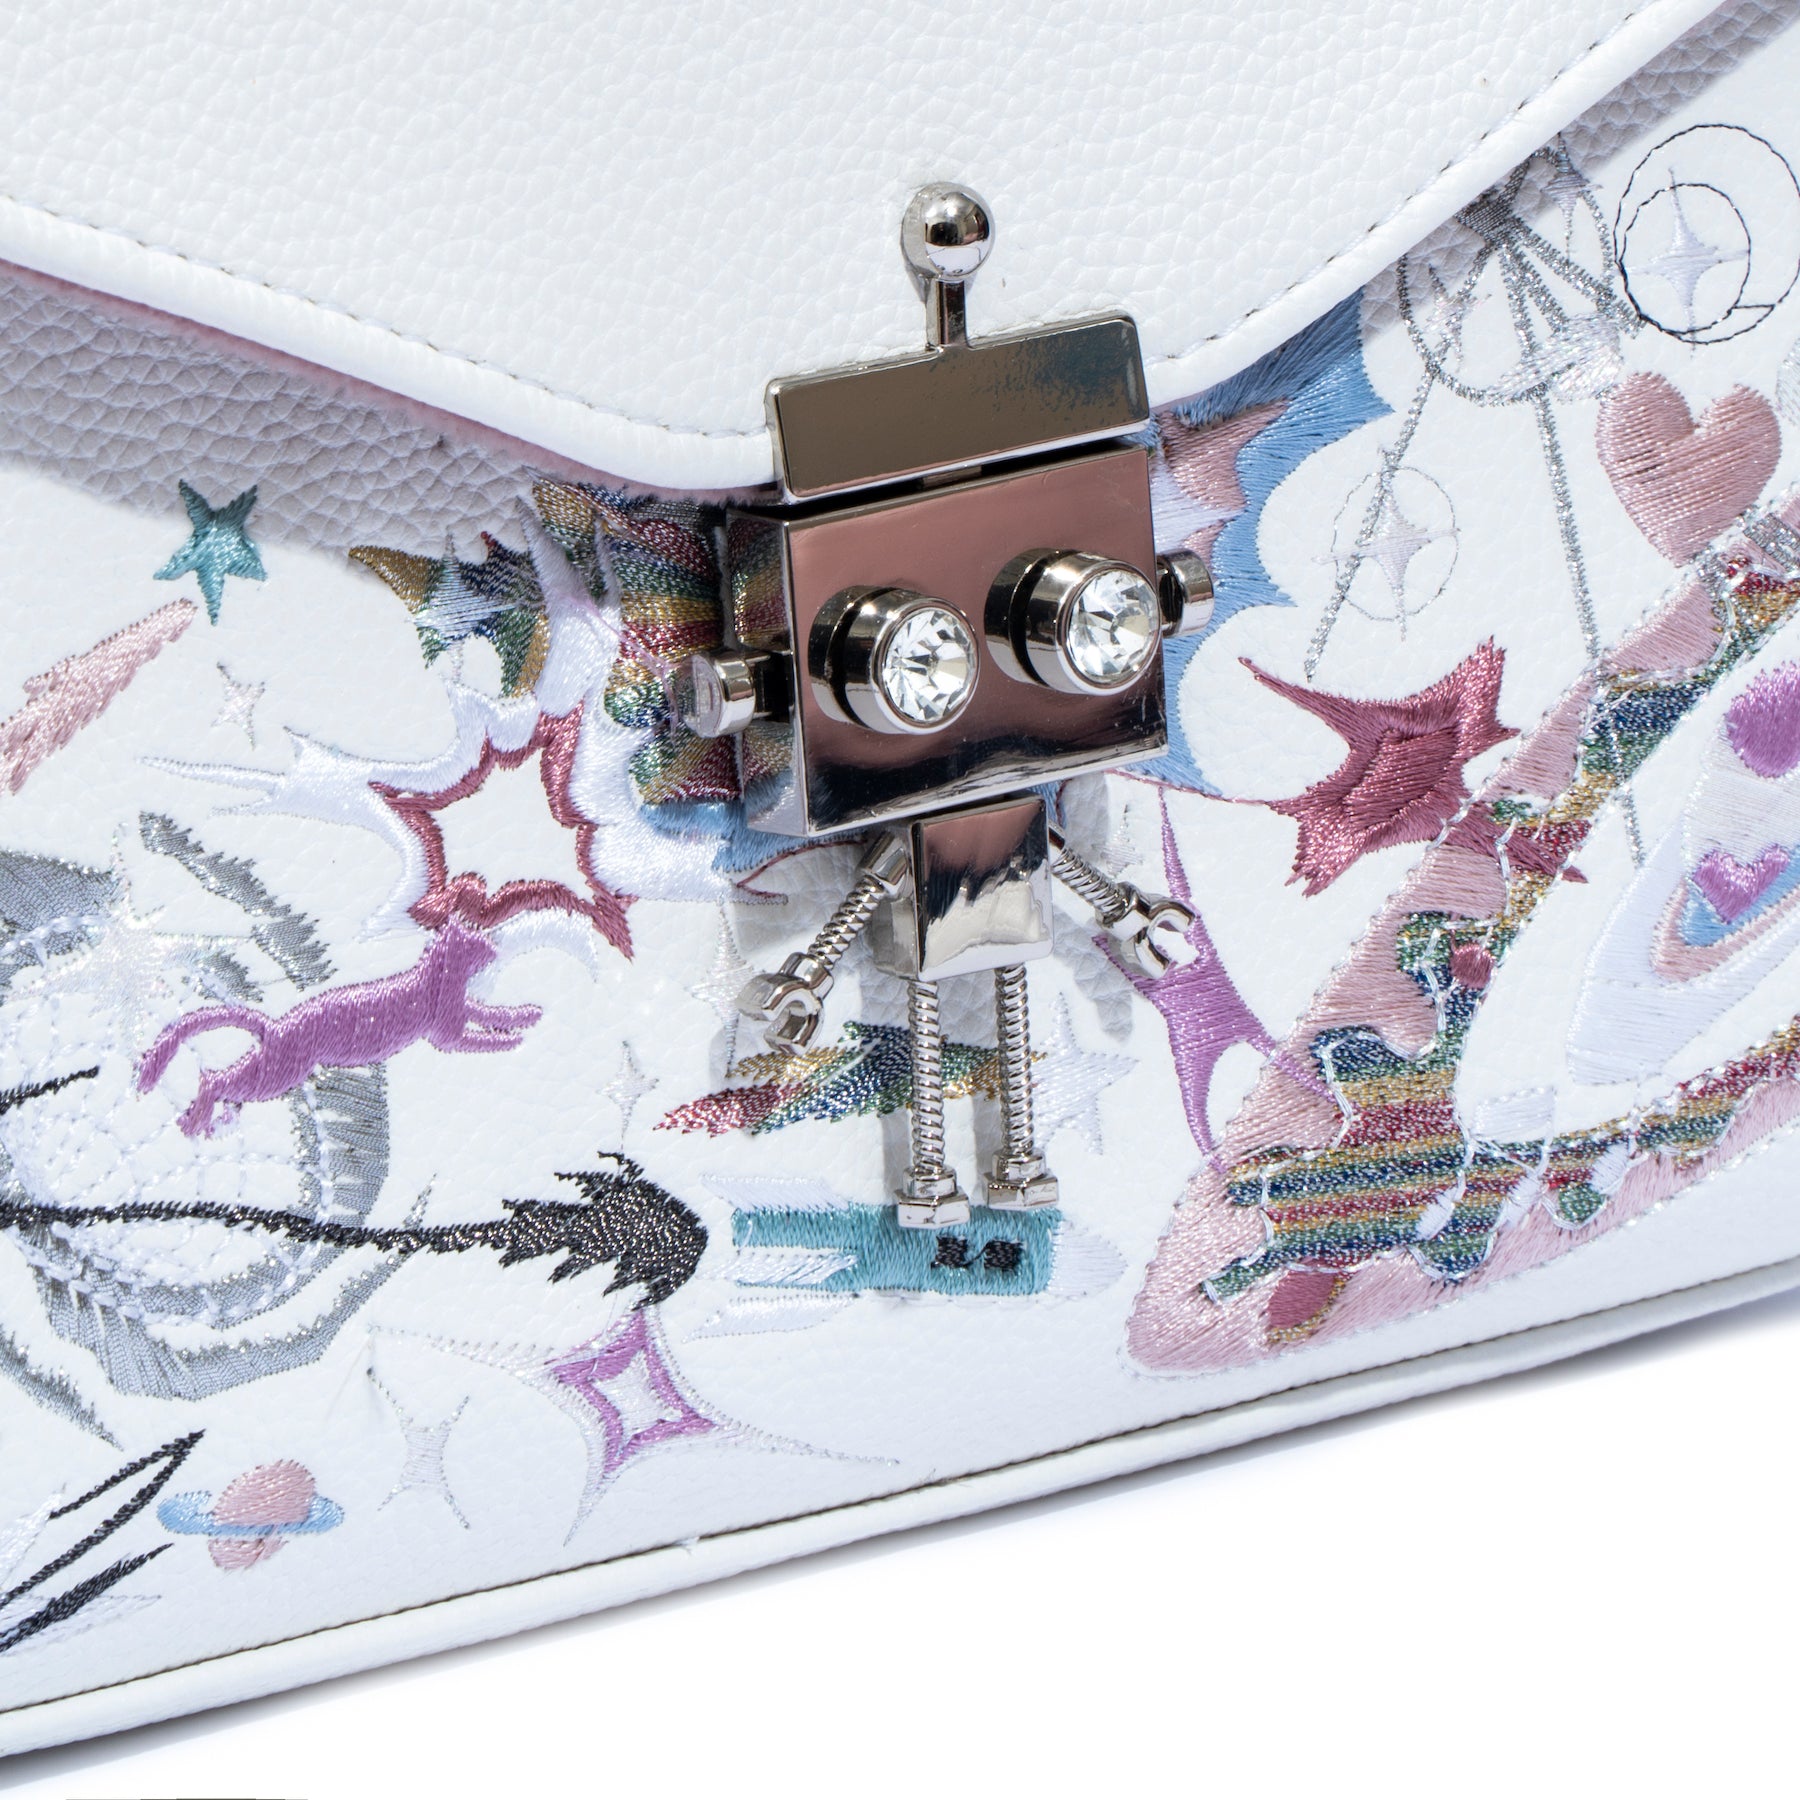 Heaven Flap Bag - Embroidered with Signature Robot Lock – NGAOS UK